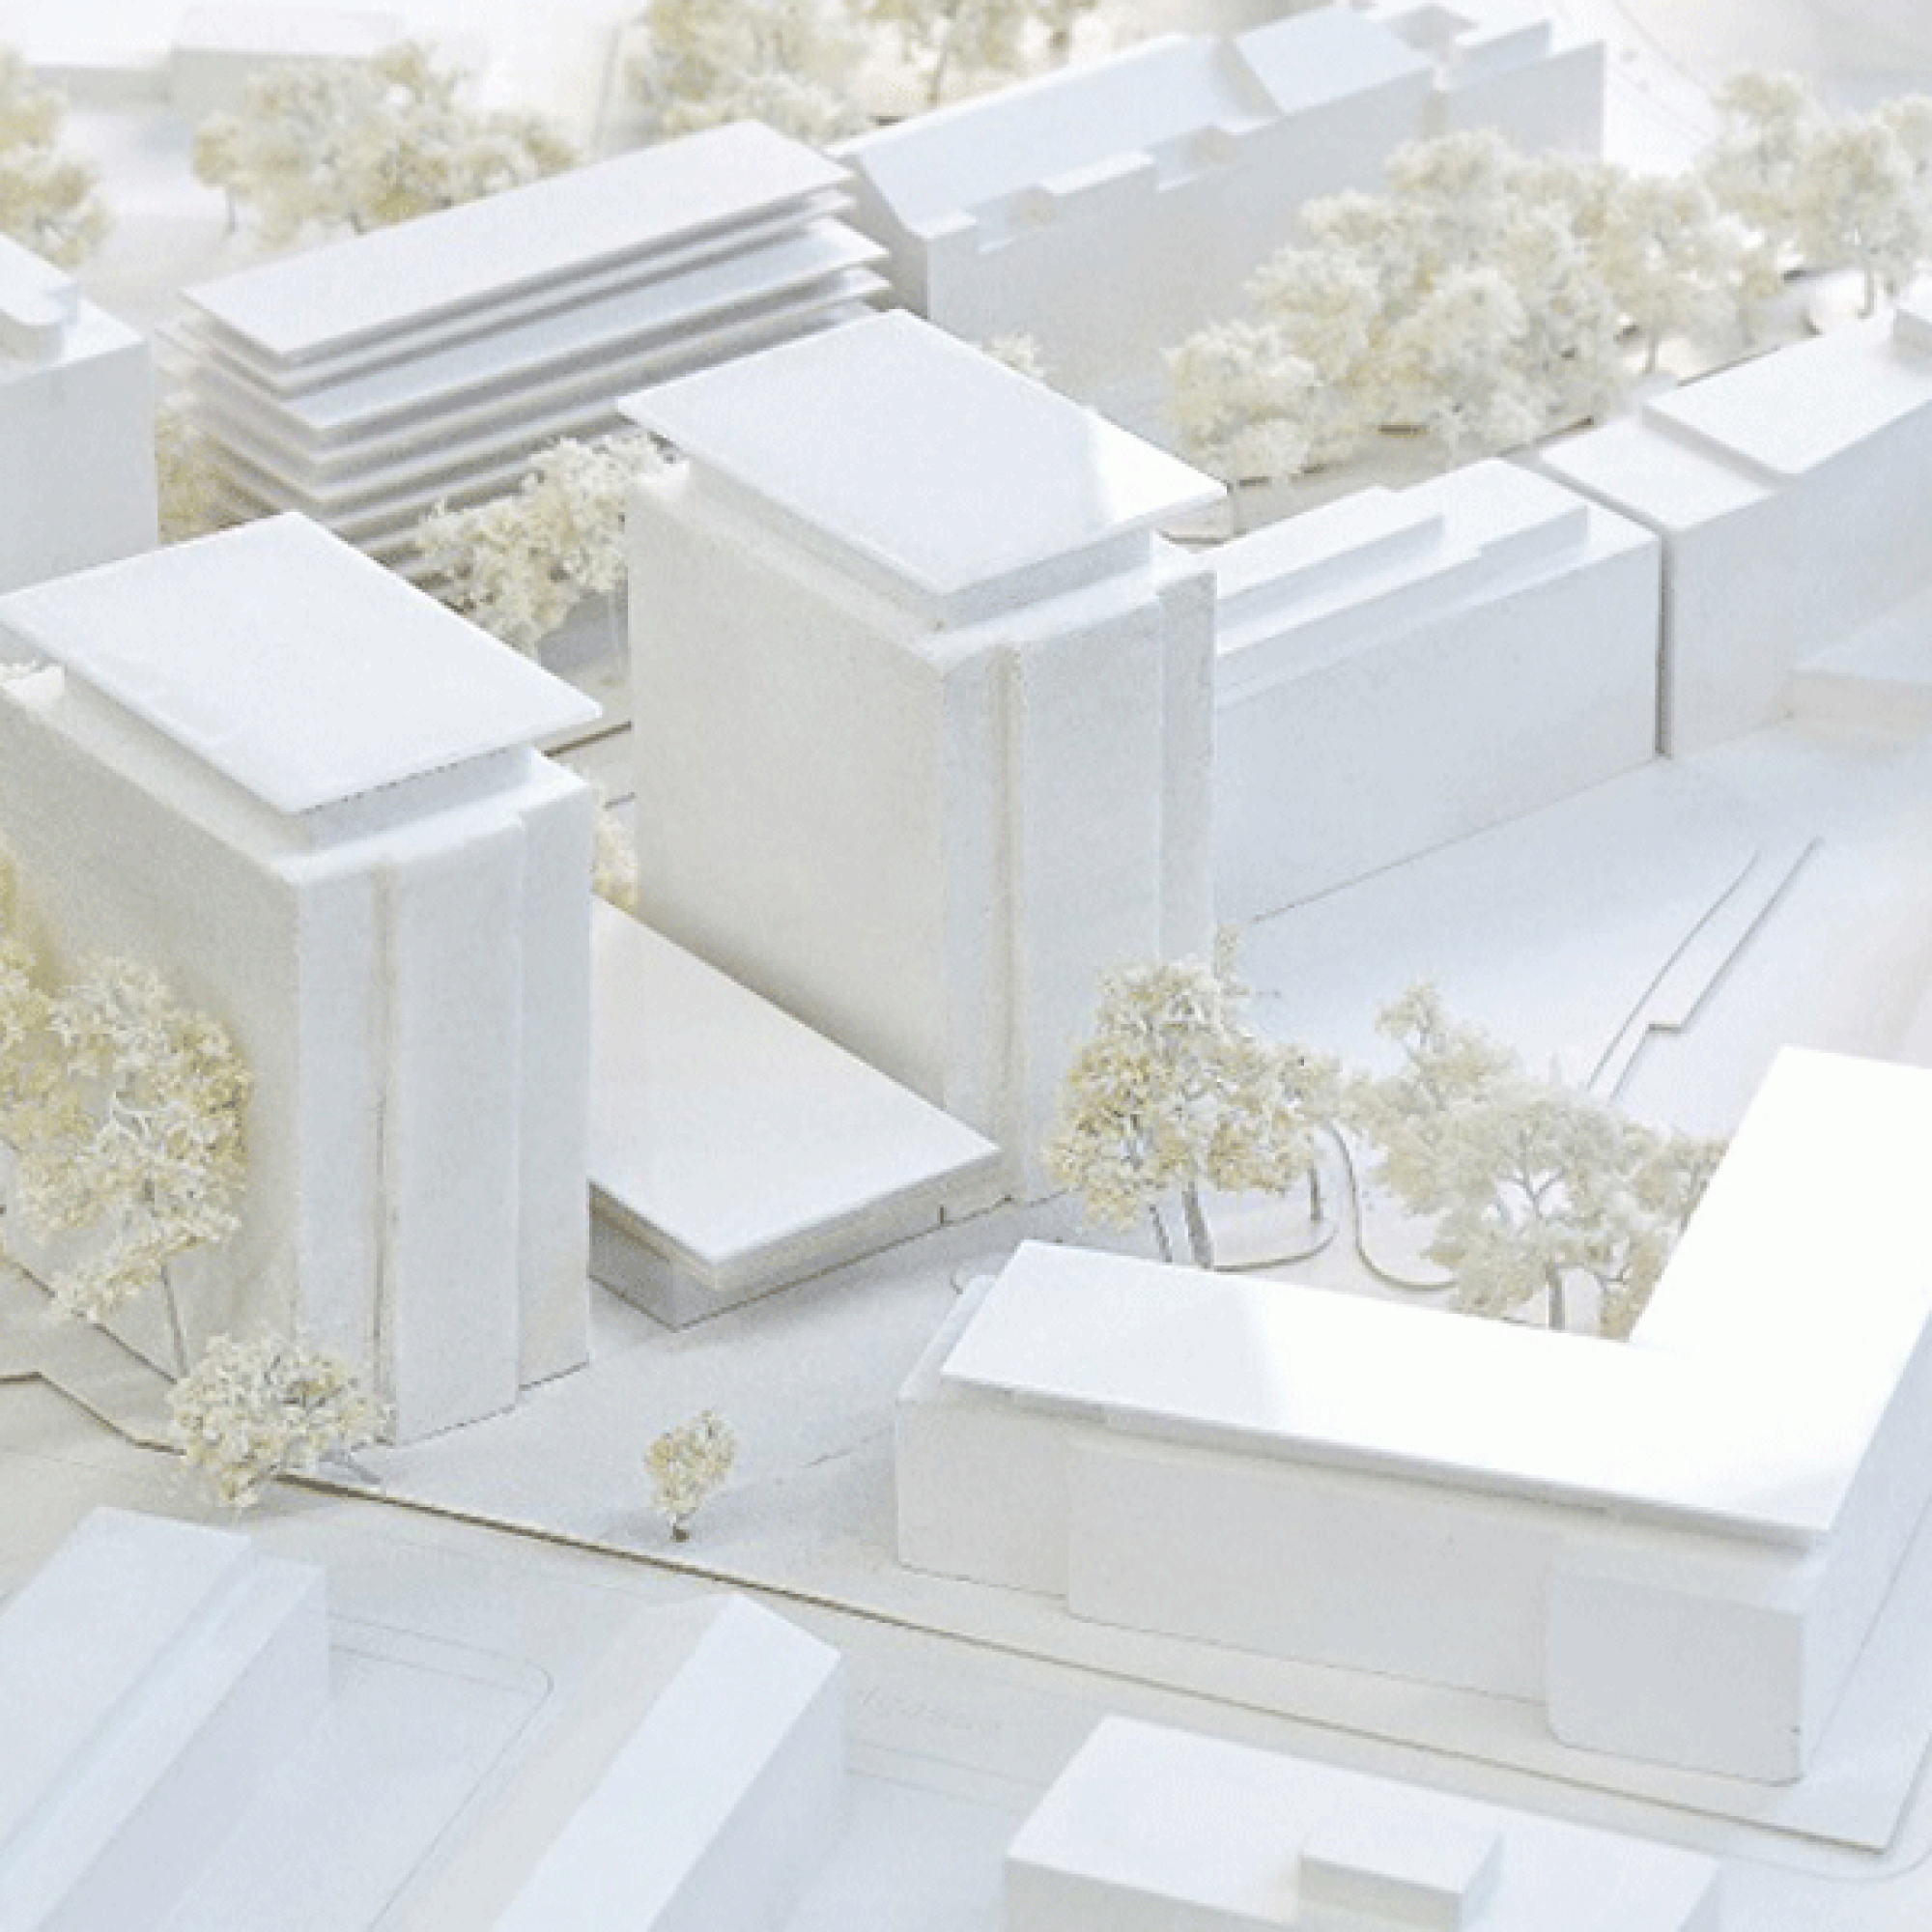 Modell des Neubau-Projekts.